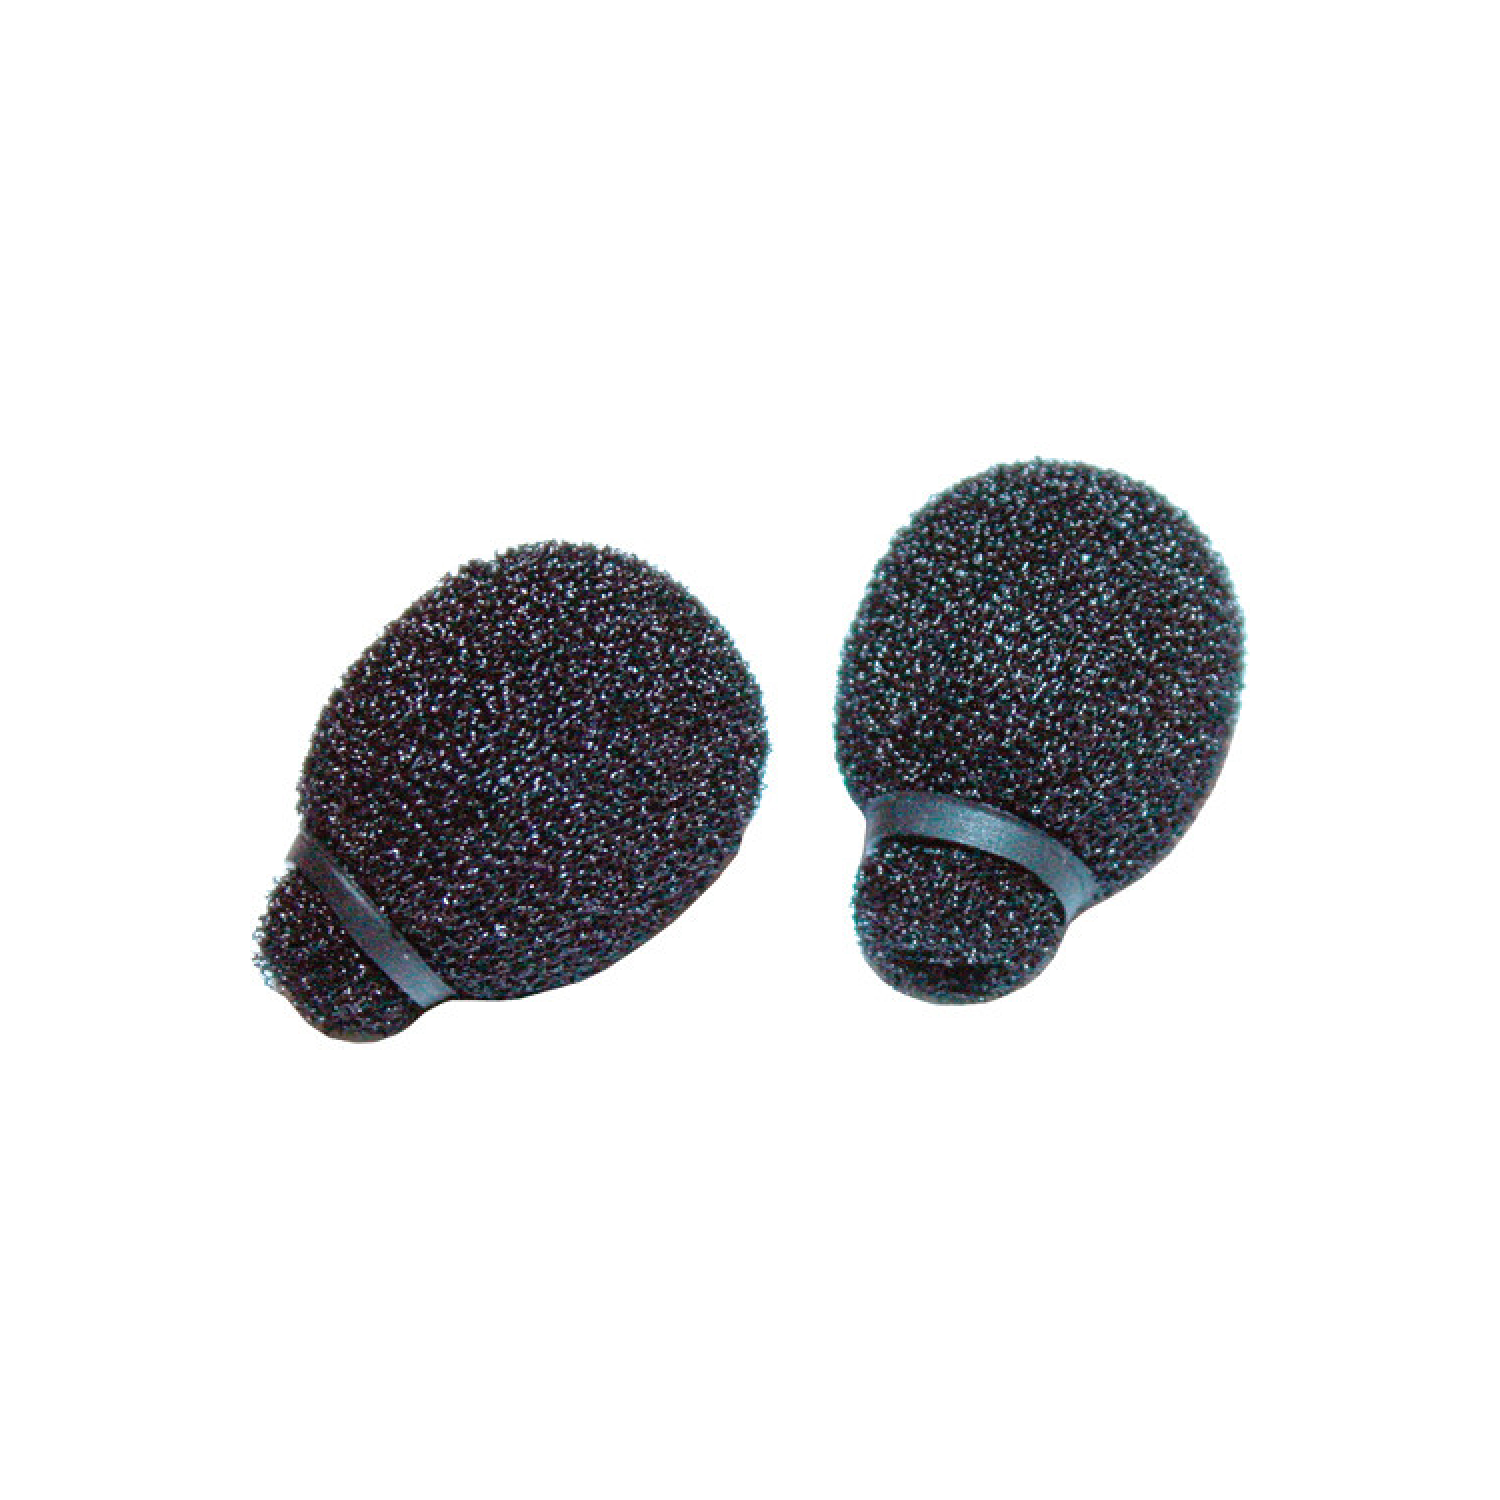 Rycote Miniature Lavalier Foams Black (1 pack of 2)